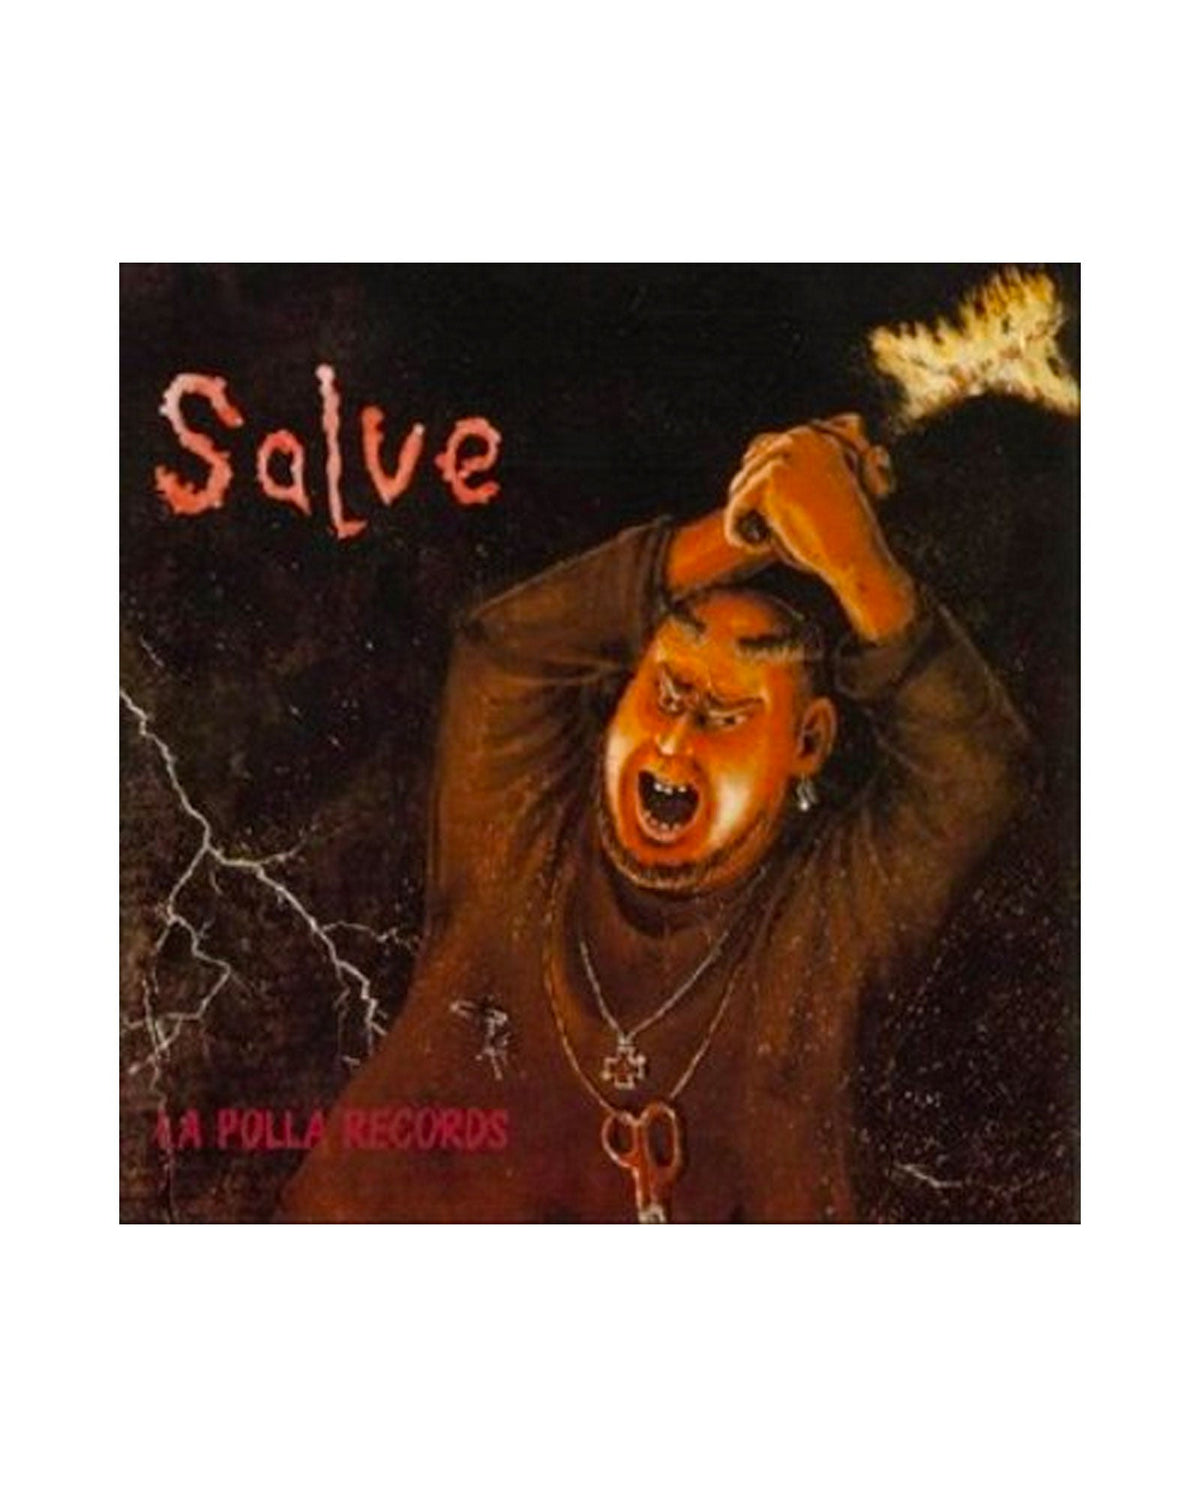 La Polla Records - LP Vinilo "Salve" - Rocktud - La Polla Records